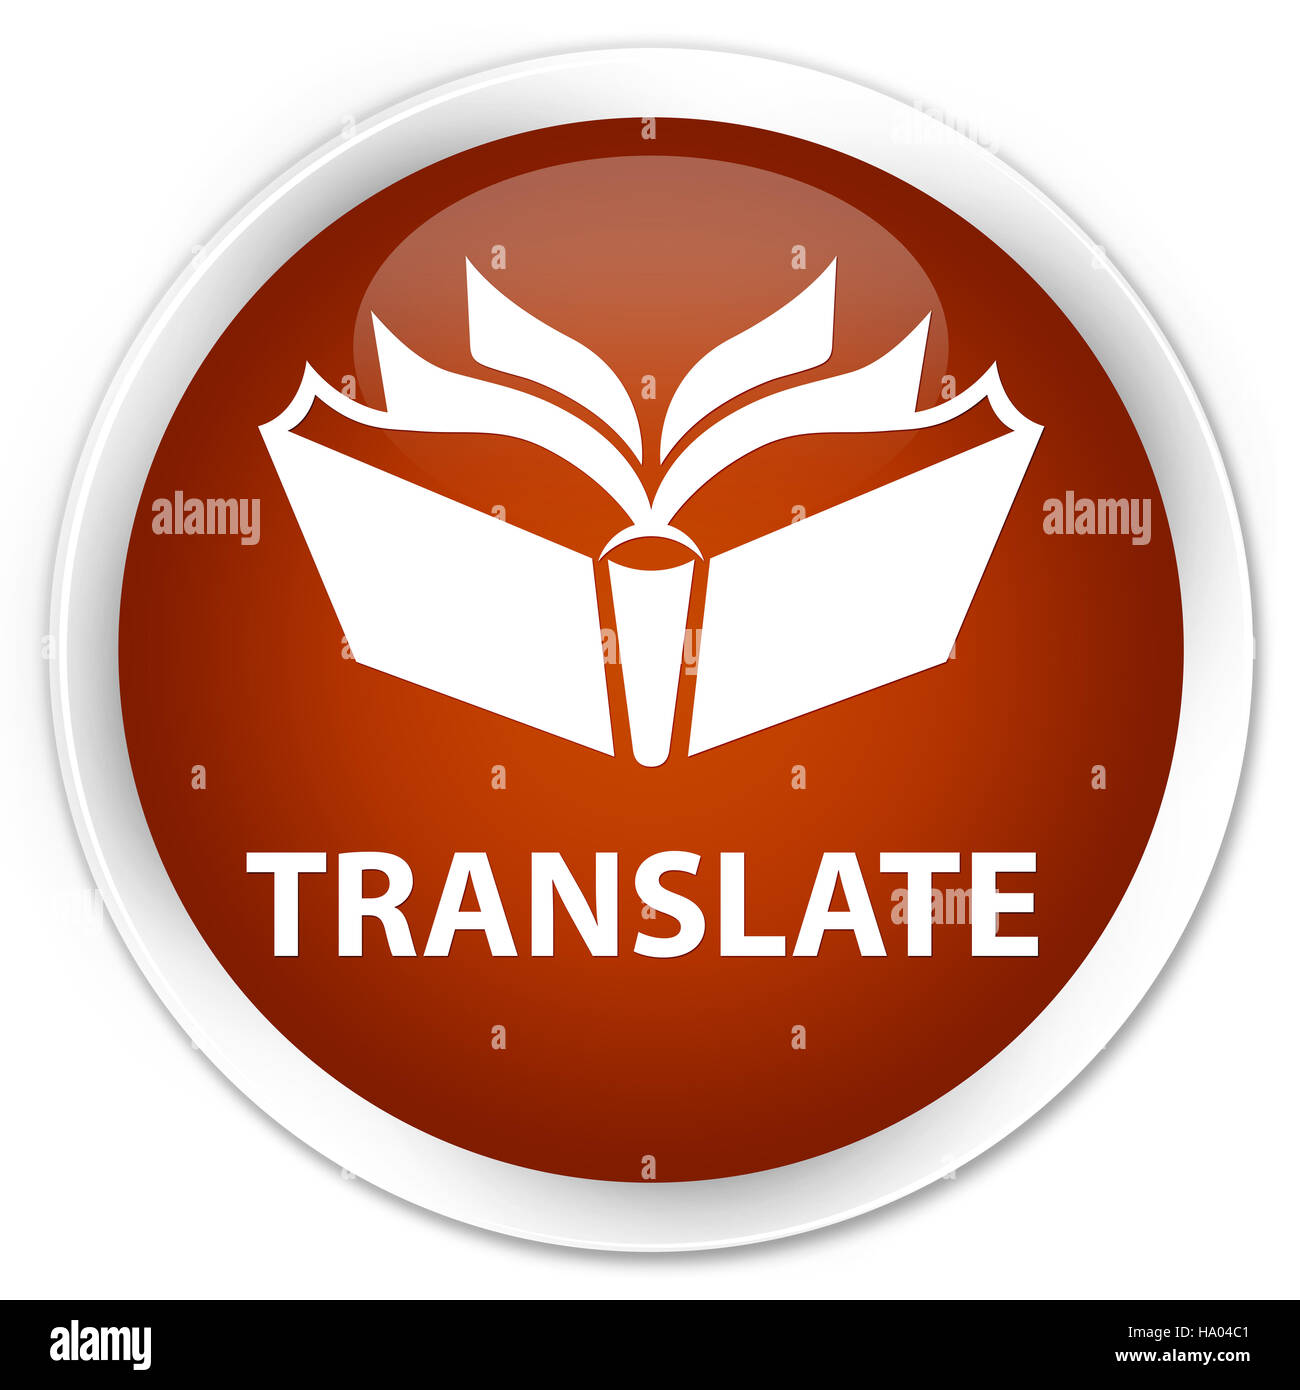 Translate isolé sur bouton rond marron premium abstract illustration Banque D'Images